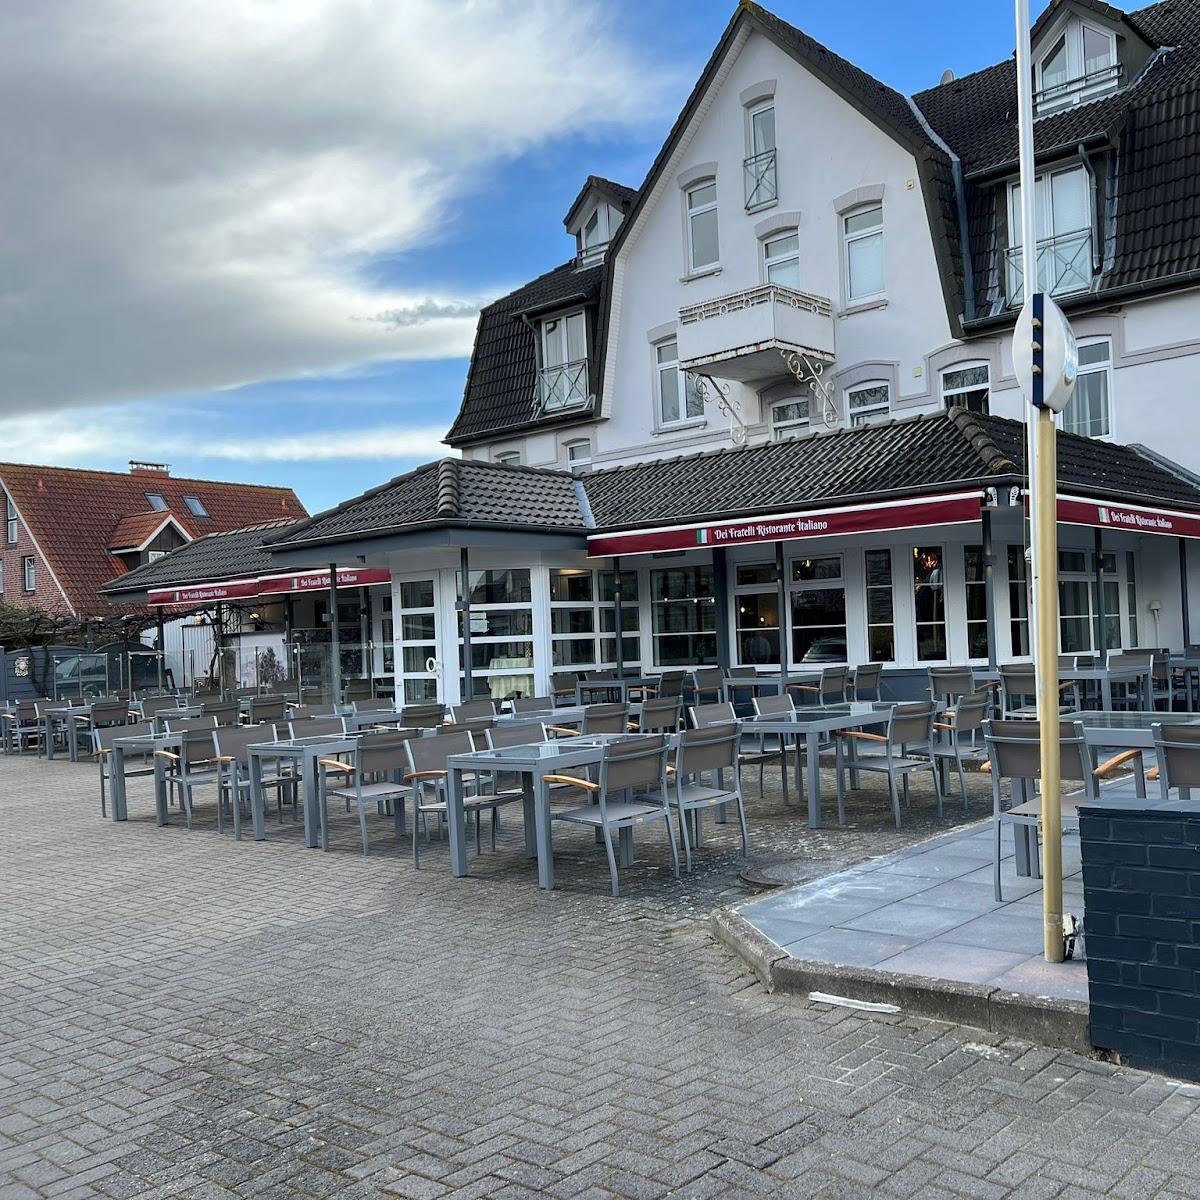 Restaurant "Ristorante dei Fratelli" in Kellenhusen (Ostsee)